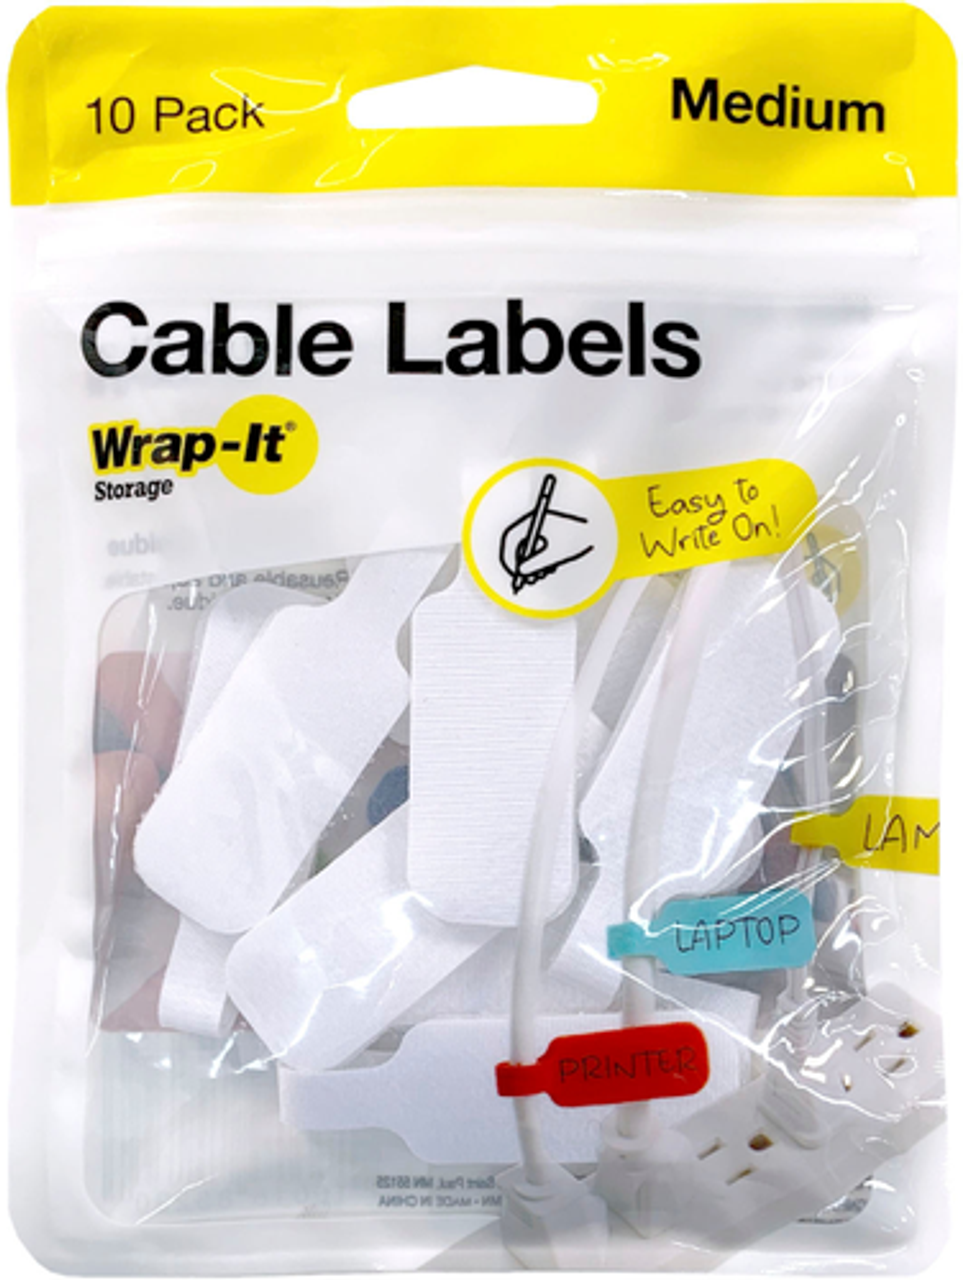 Wrap-It Storage - Cable Label - White